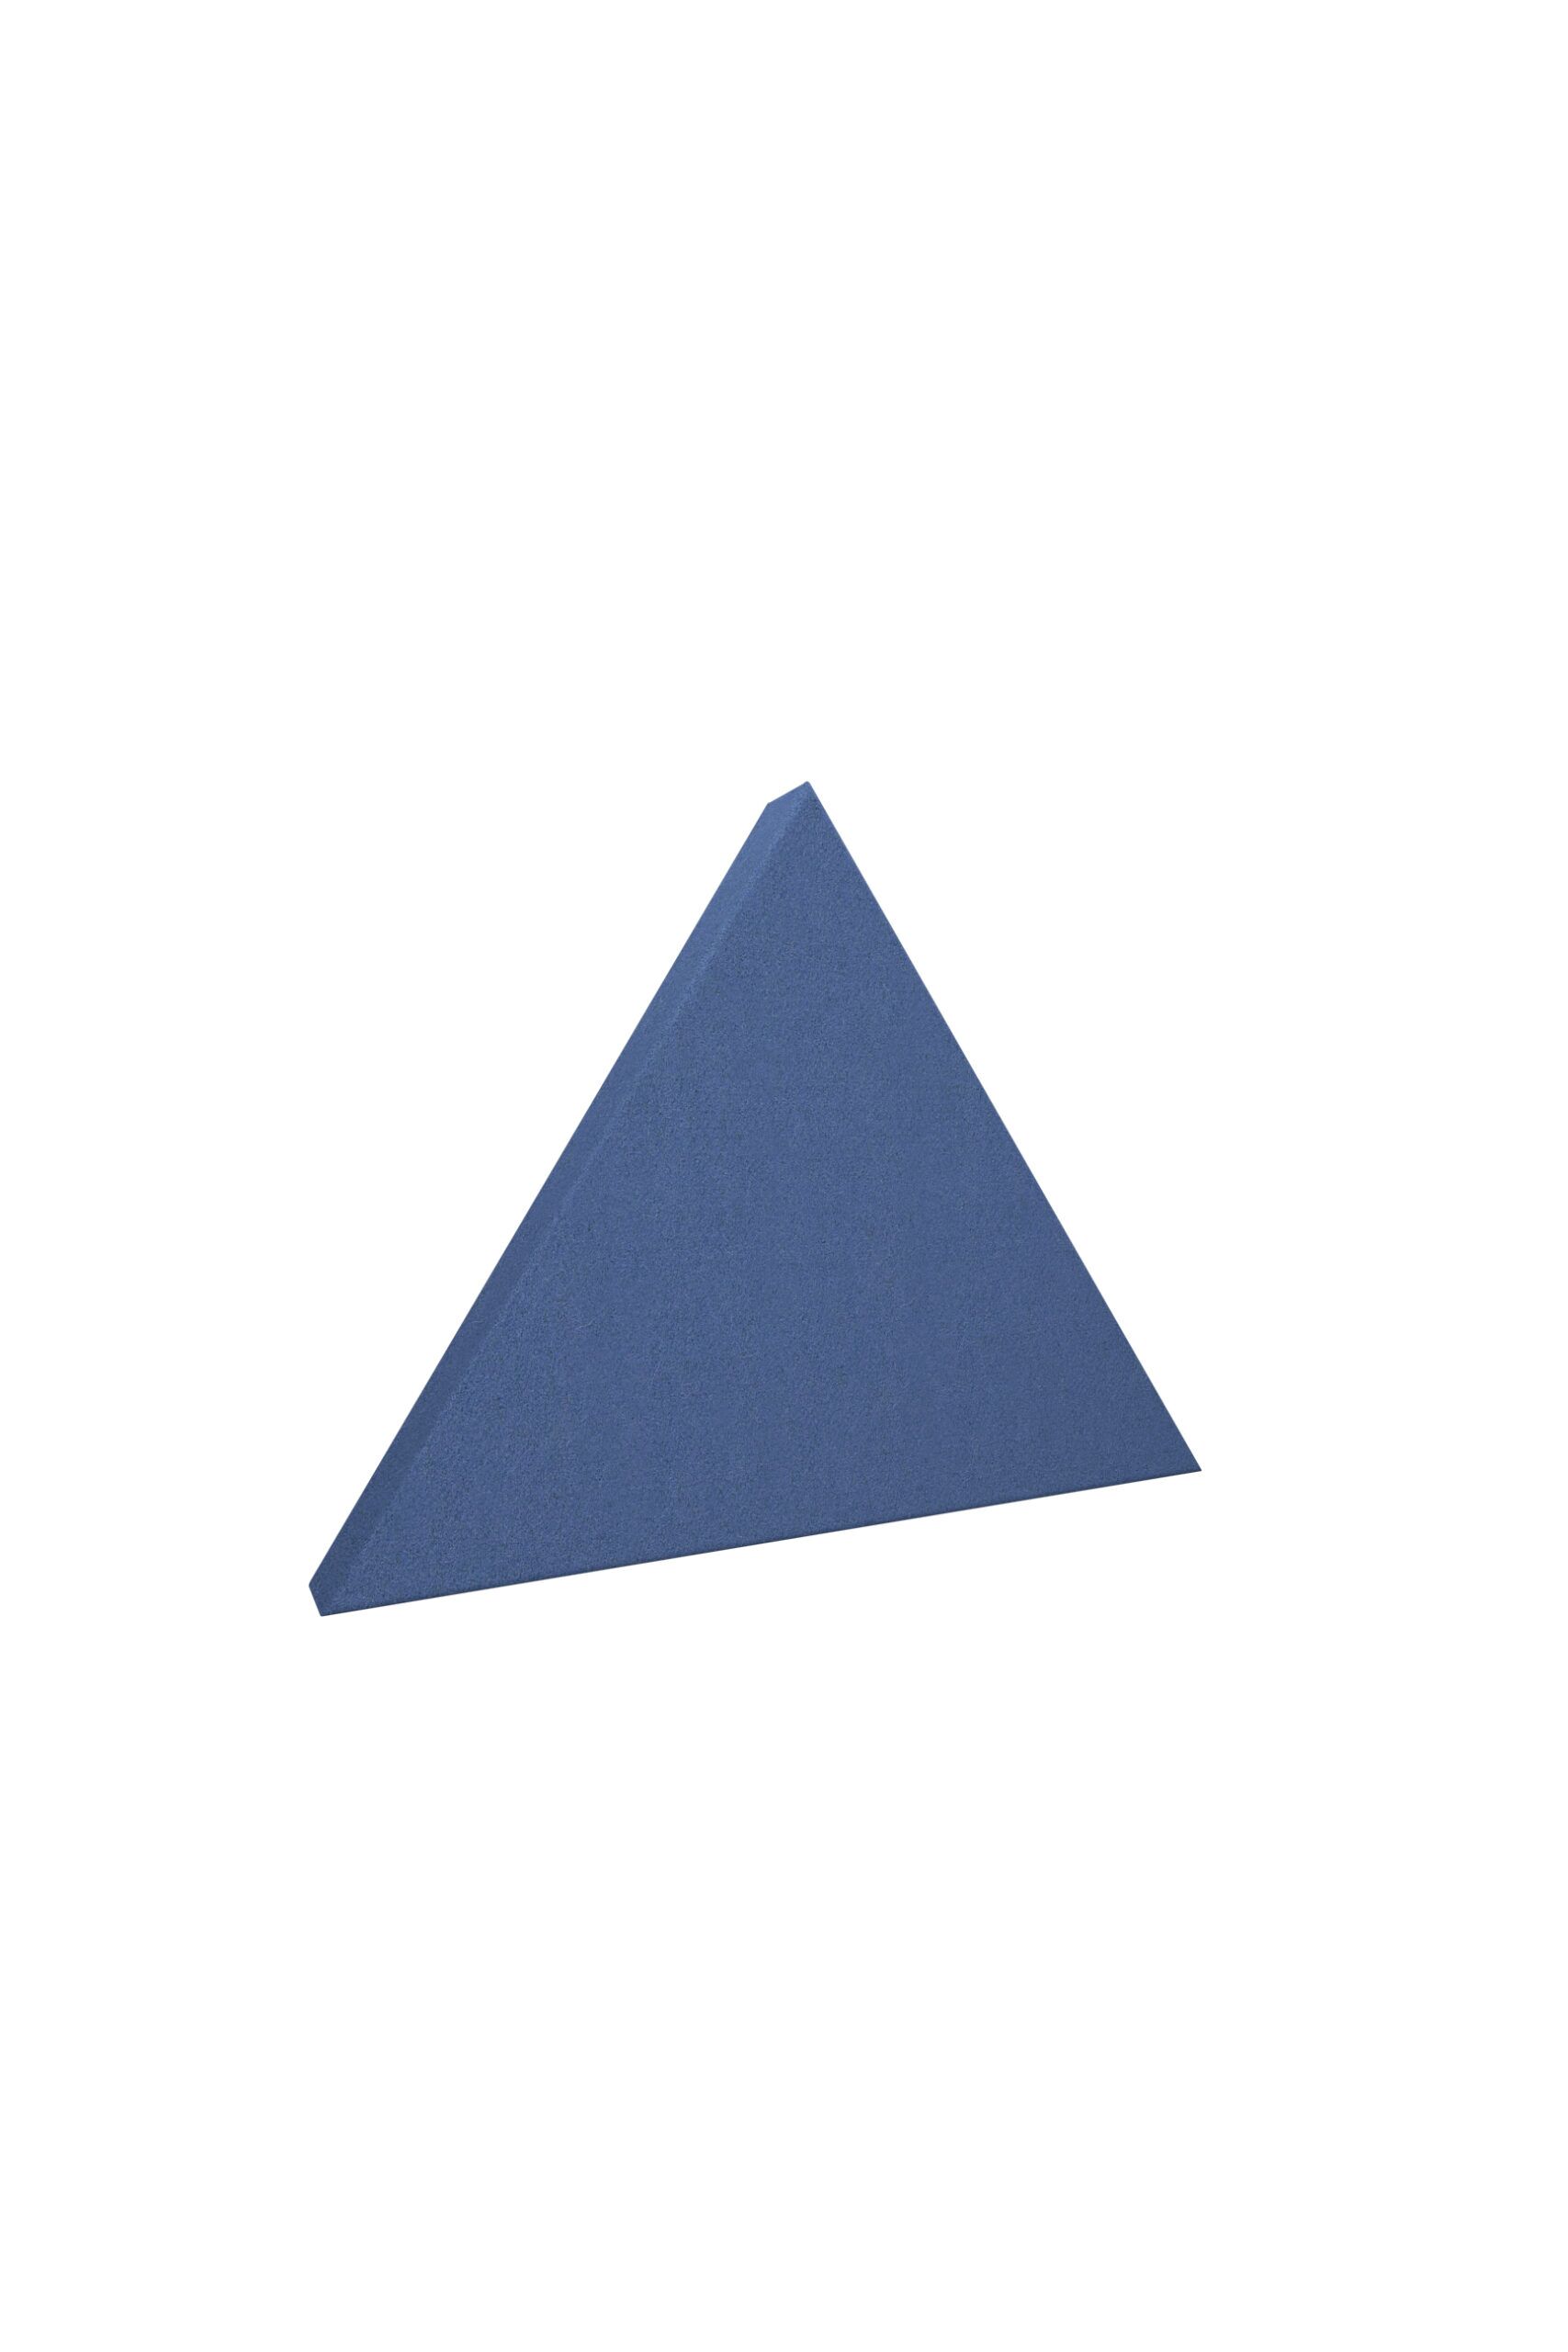 EchoGeo Acoustic Panel - Triangle